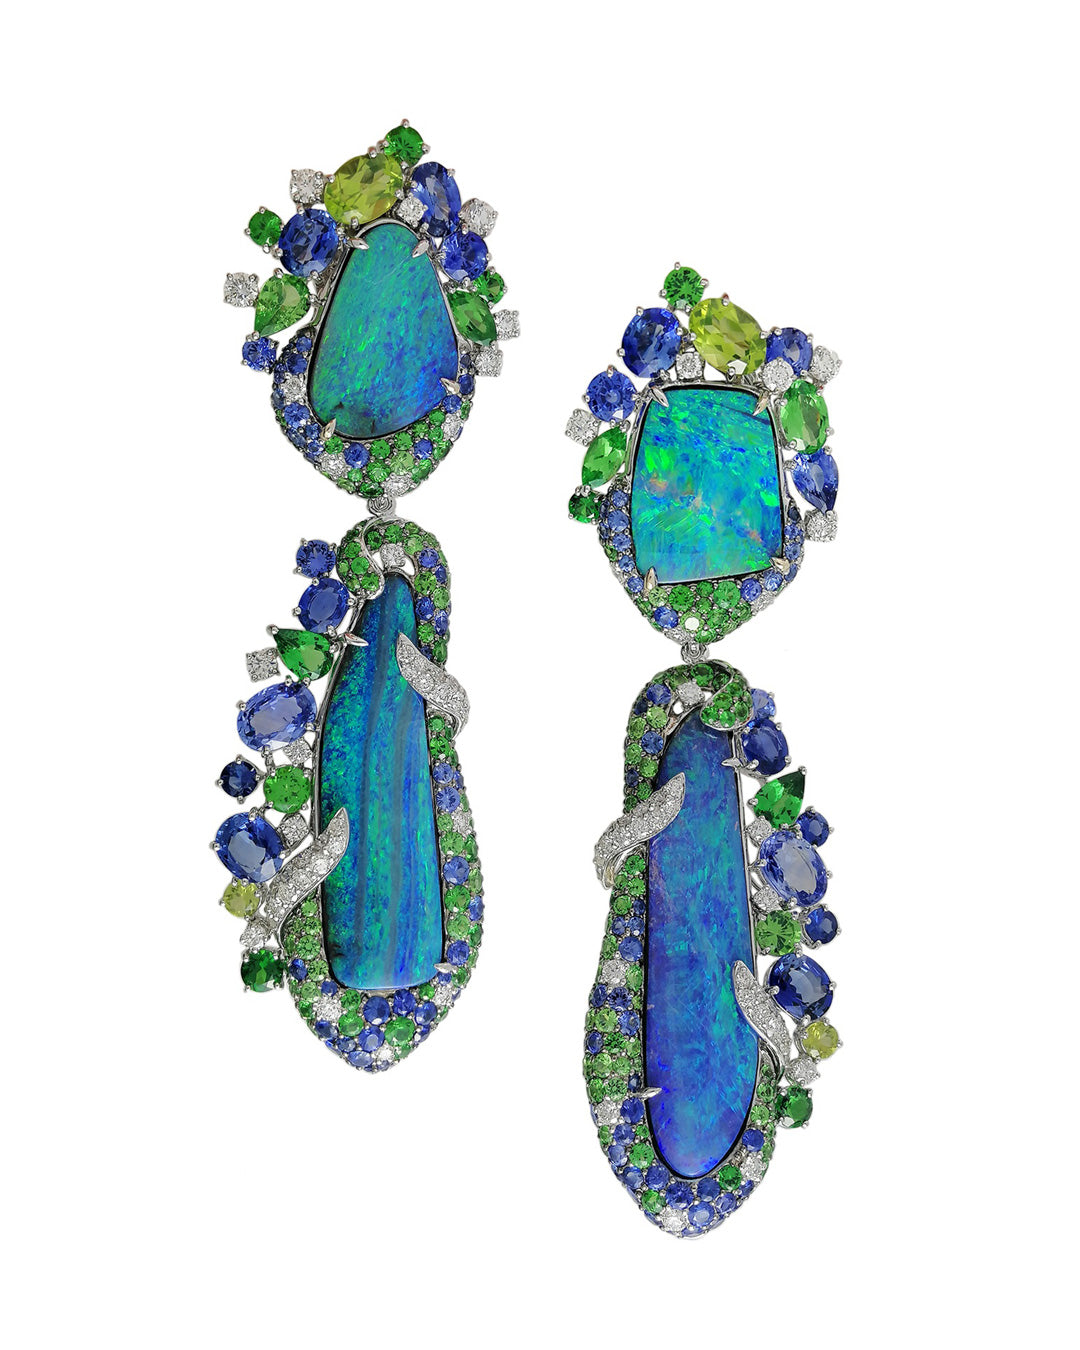 "Opal Isle" Earrings enhanced with diamonds, sapphires, tsavorite and peridot, crafted in 18 karat white gold